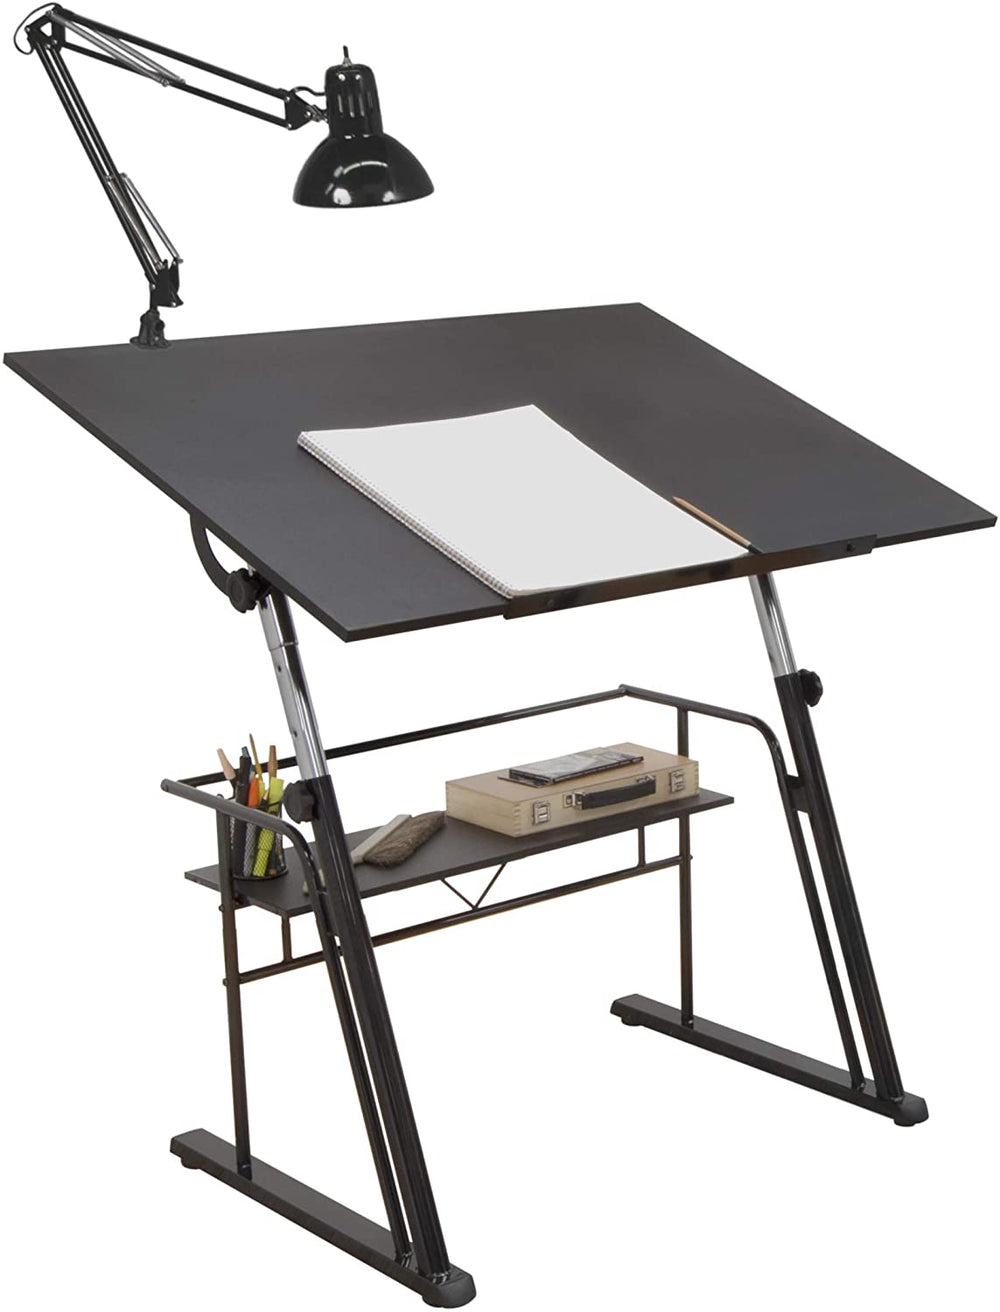 STUDIO DESIGNS Zenith Craft Mesa de dibujo de escritorio, mesa de dibujo superior, ajustable, mesa de dibujo, escritorio, escritorio, escritorio, color negro, 13340 - Arteztik